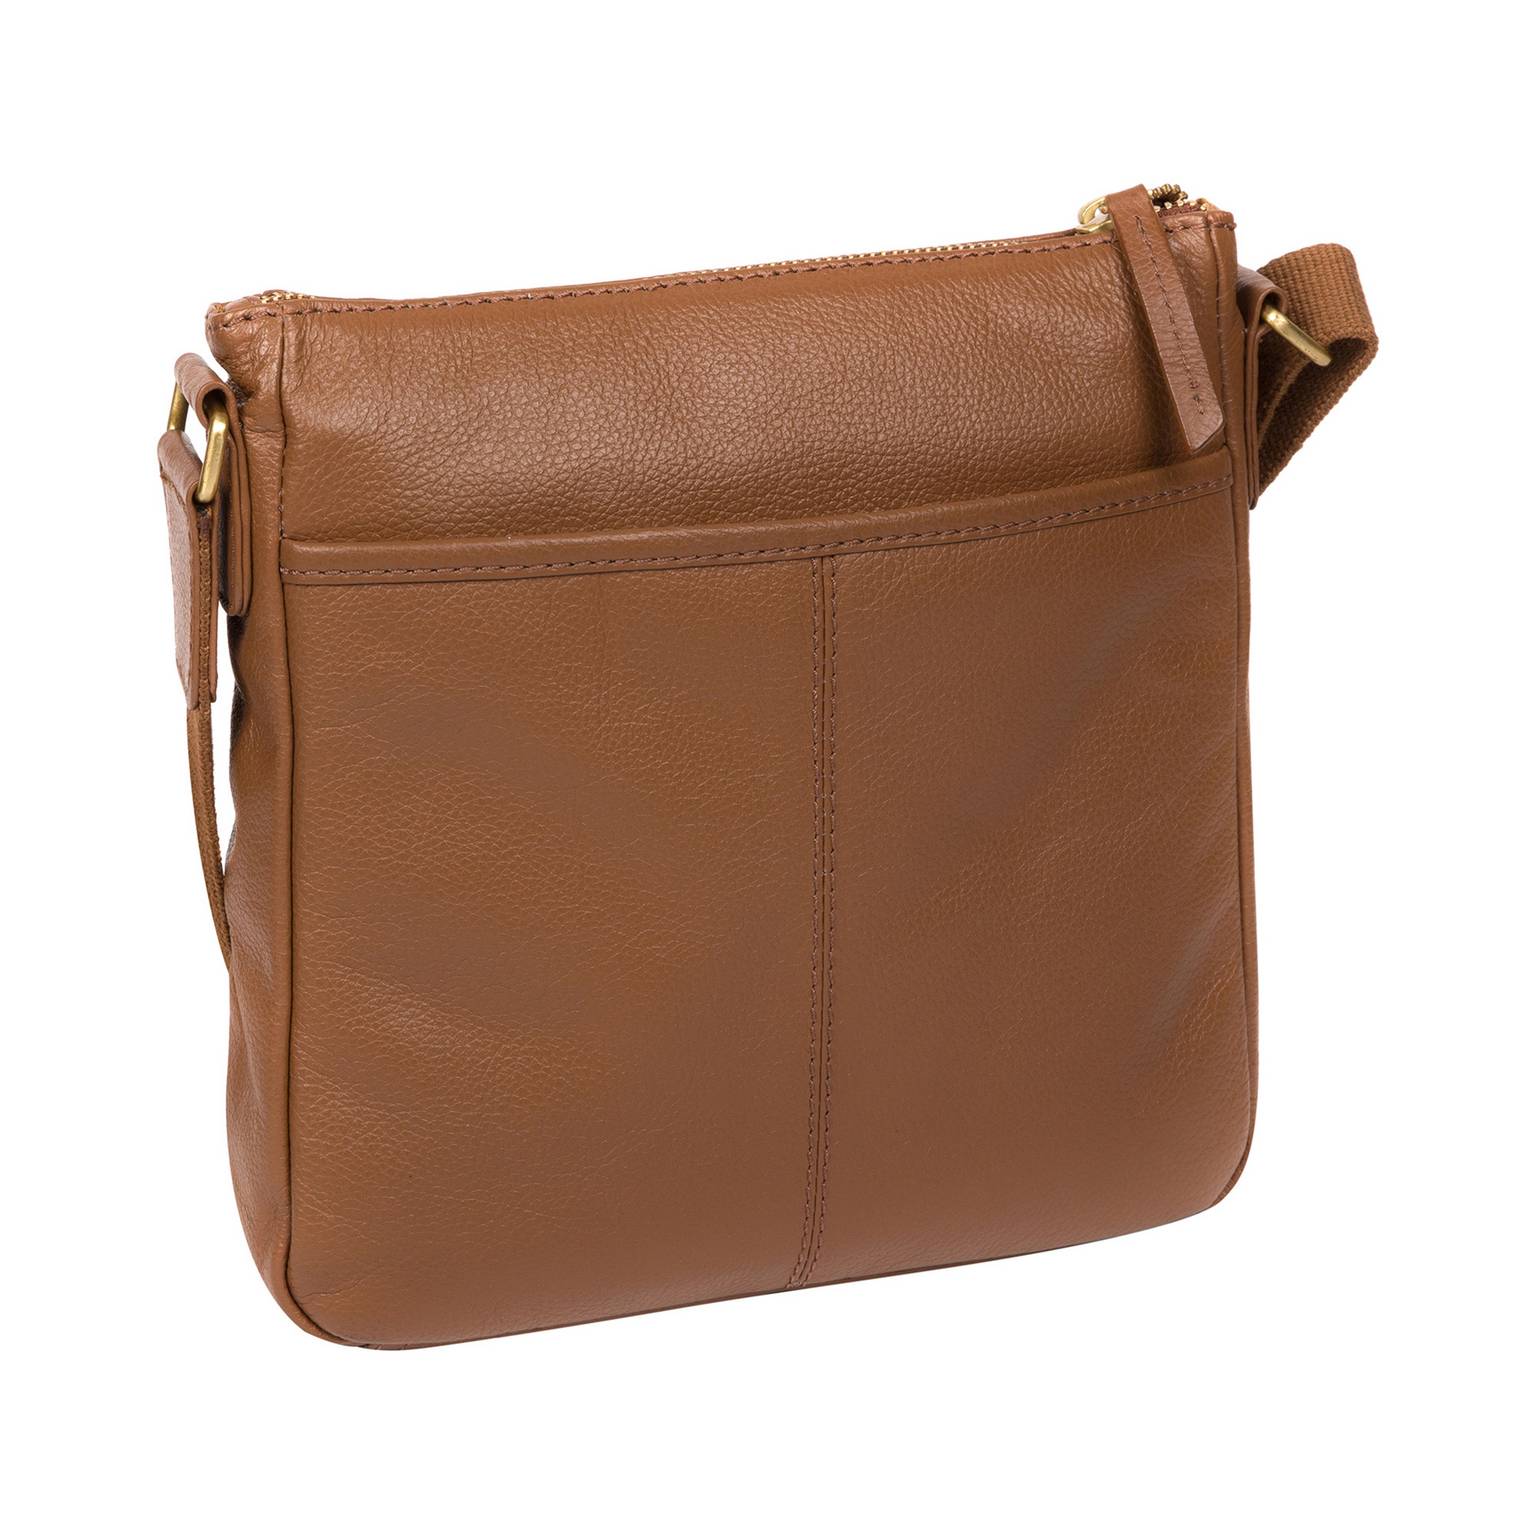 Tan Leather Shoulder Bag, Cross Body Bag